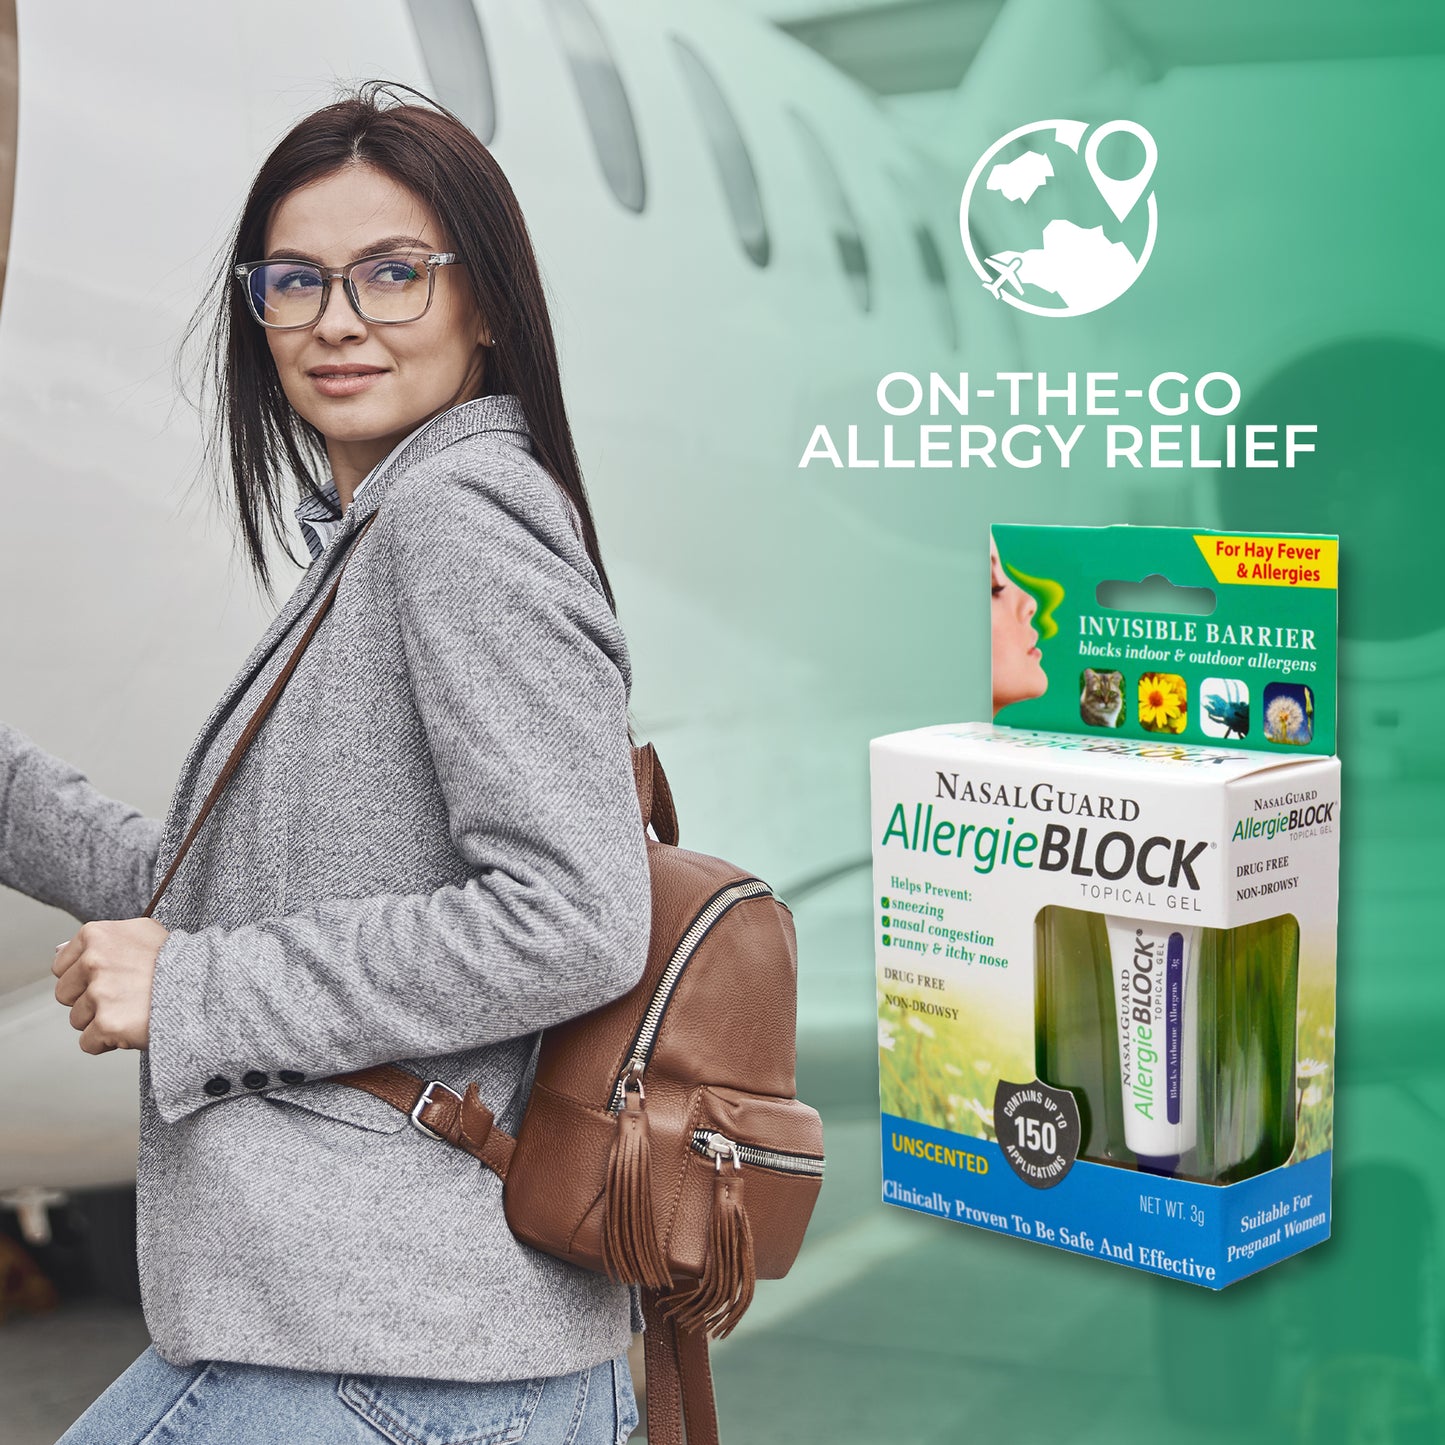 NasalGuard AllergieBlock - Allergy Relief Gel - Drug-Free, Unscented, 3g Tube